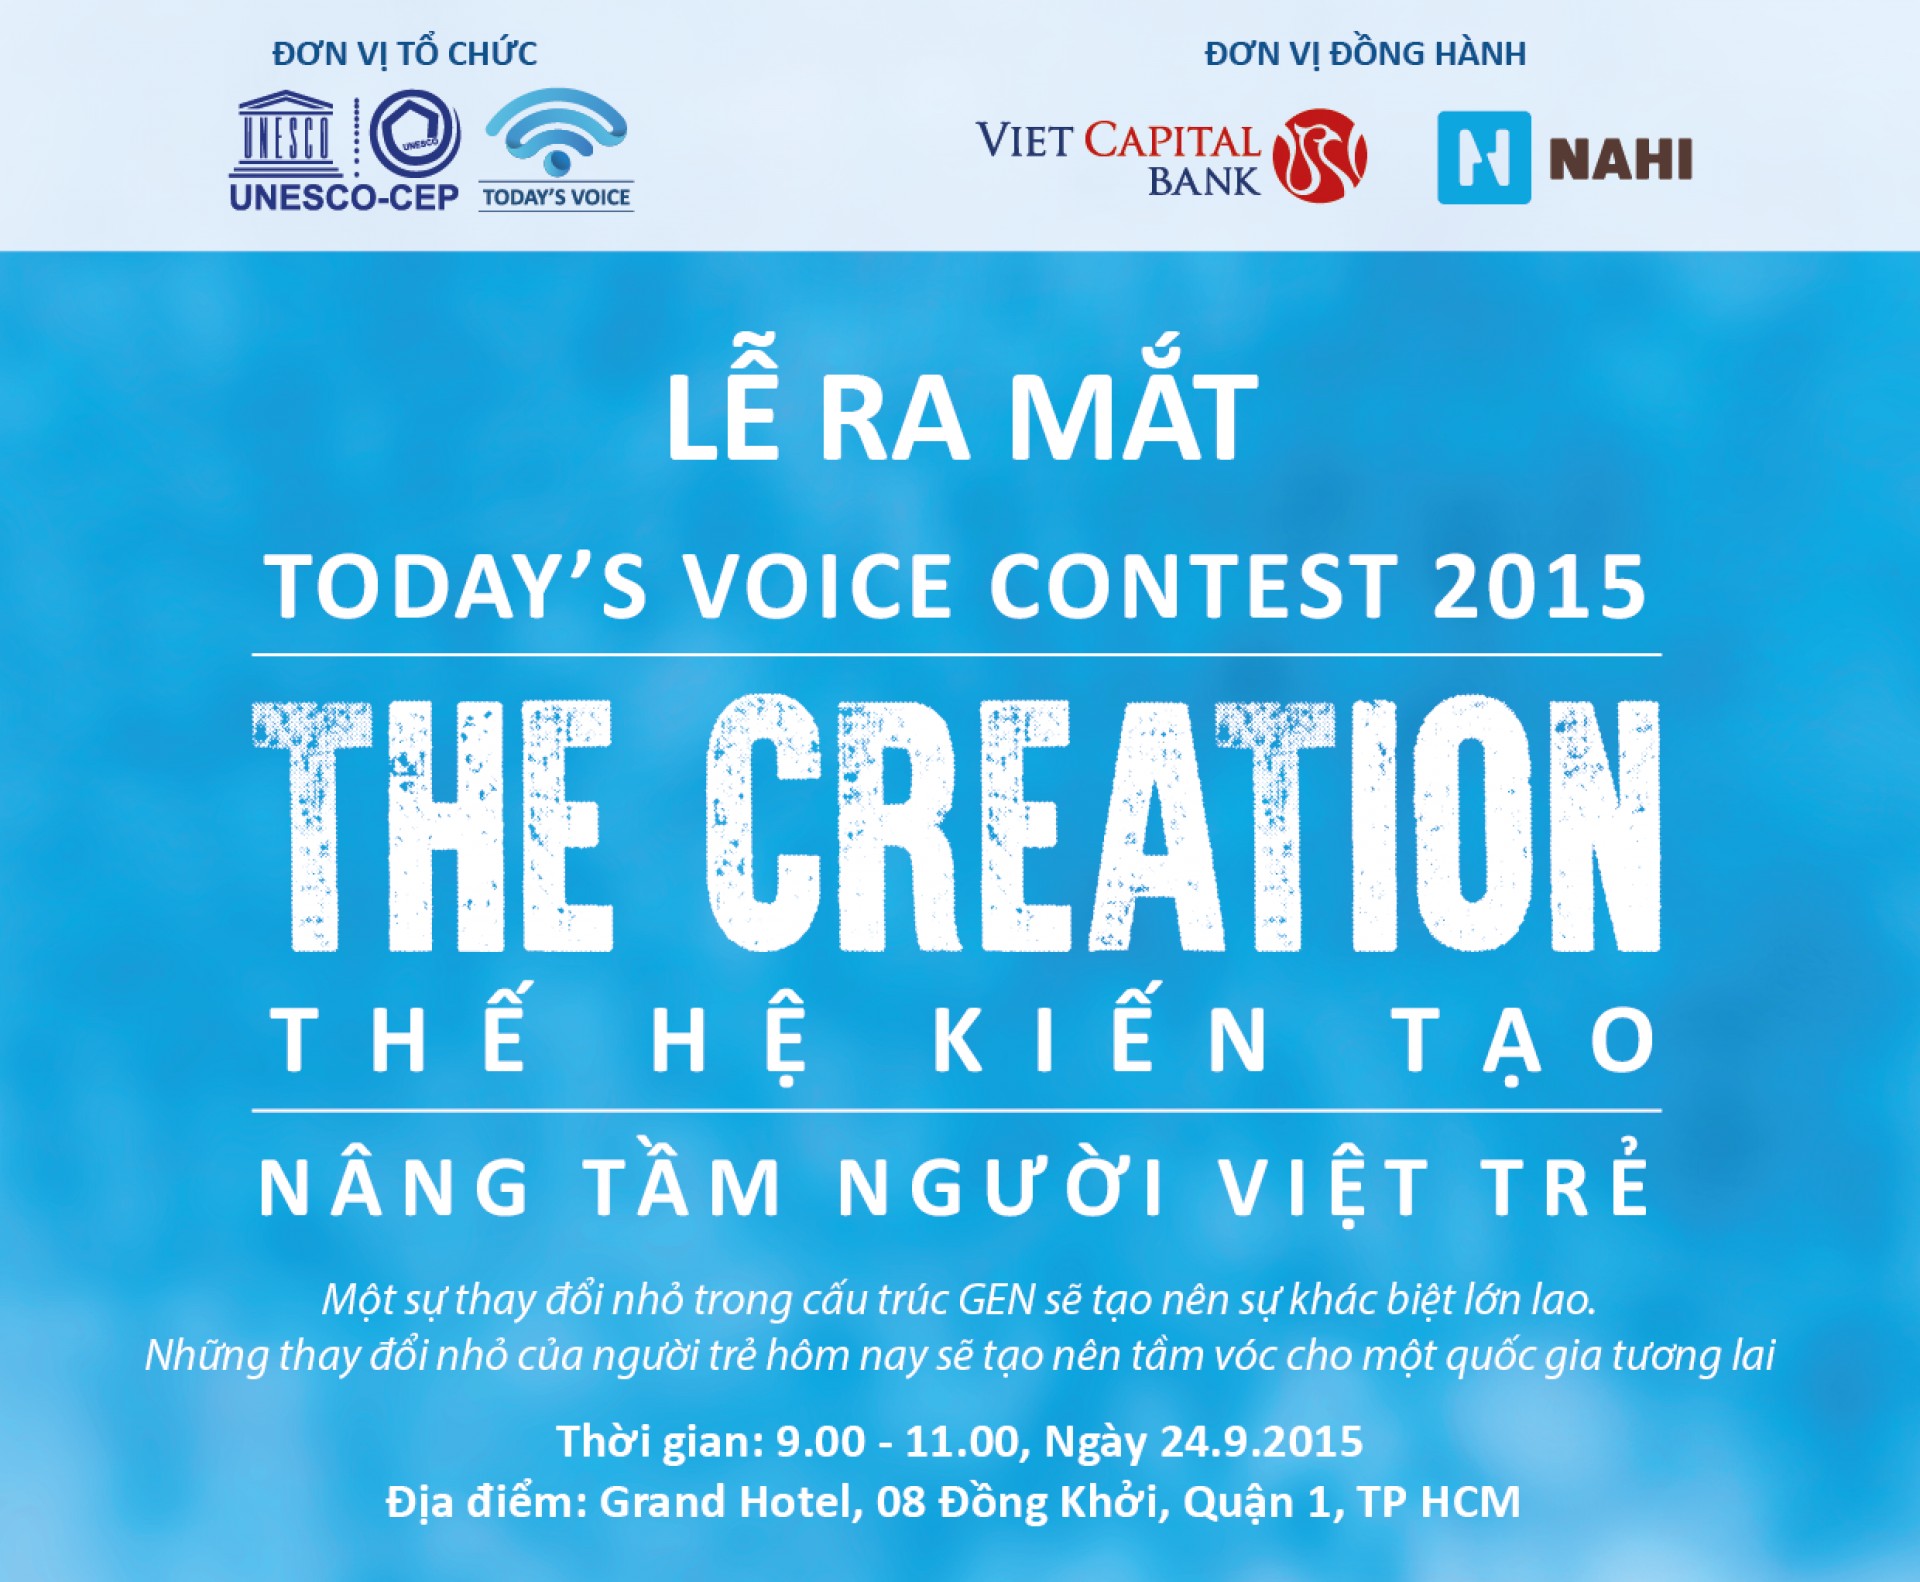 Today's Voice Contest 2015